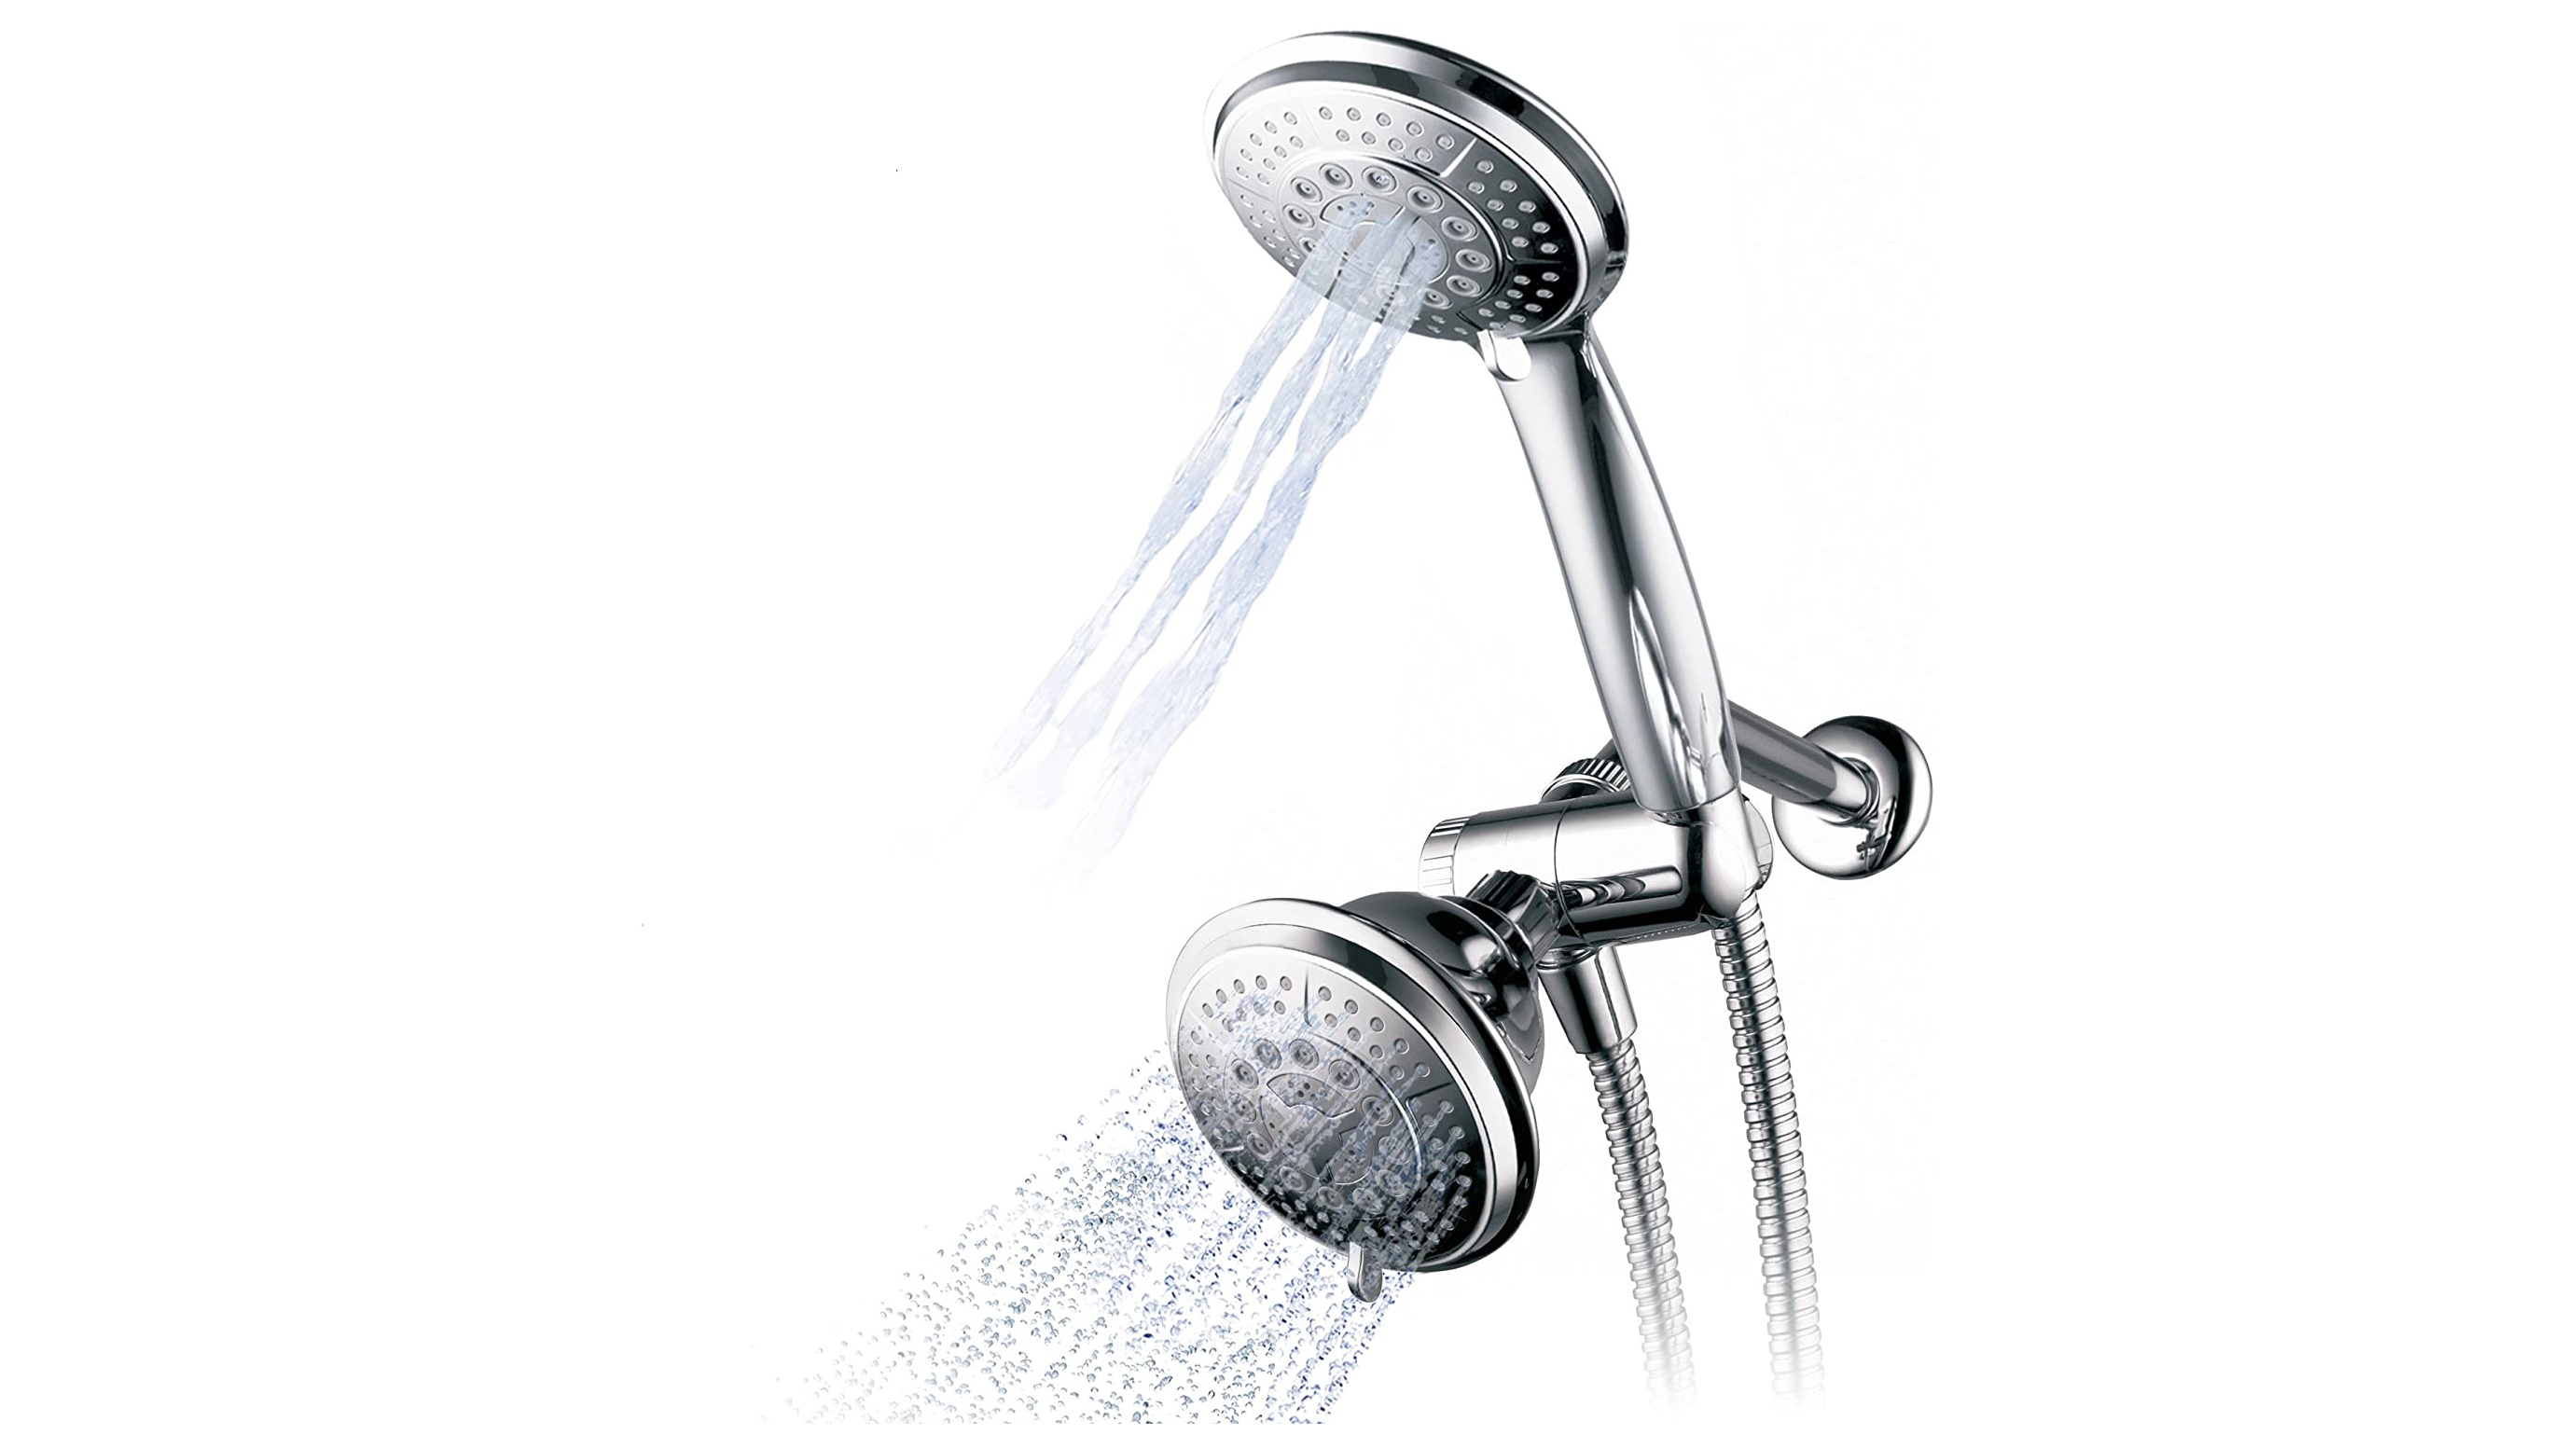 Round Pressure Booster Shower Nozzle Small Shower Head Water Saving Shower Head